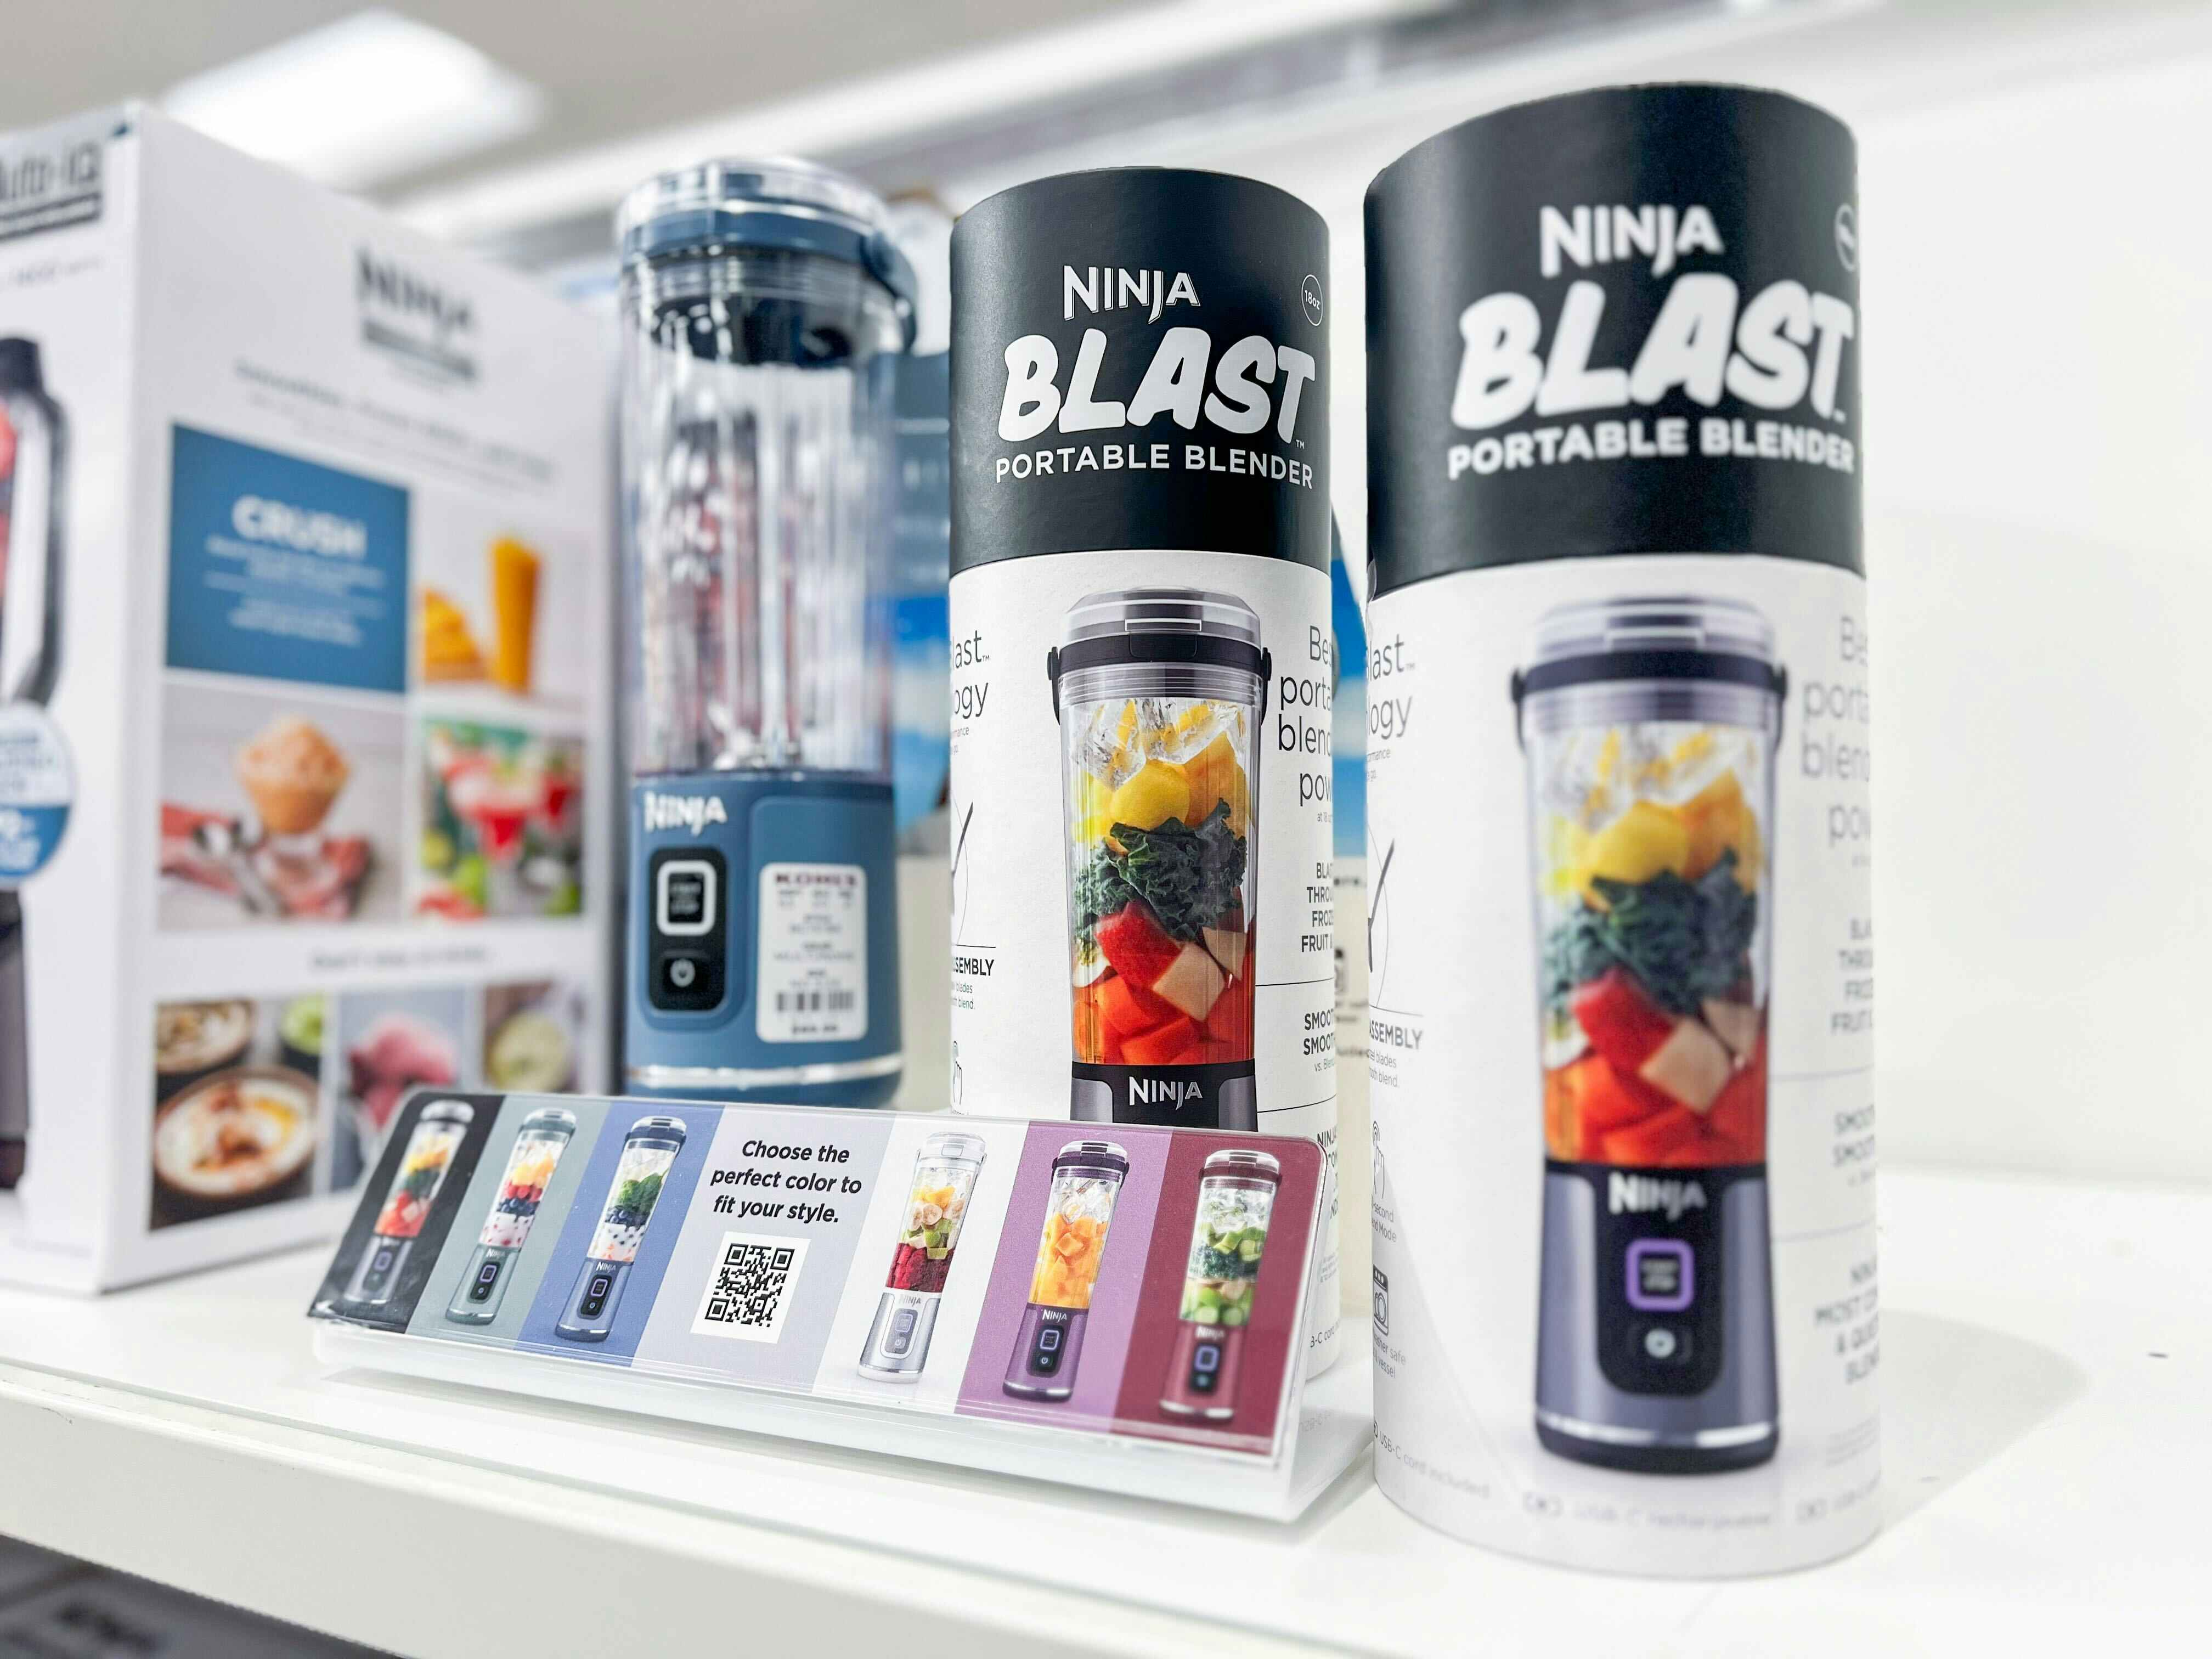 Ninja Blast Portable Blender, Now Only $30 Shipped at QVC (Reg. $59)